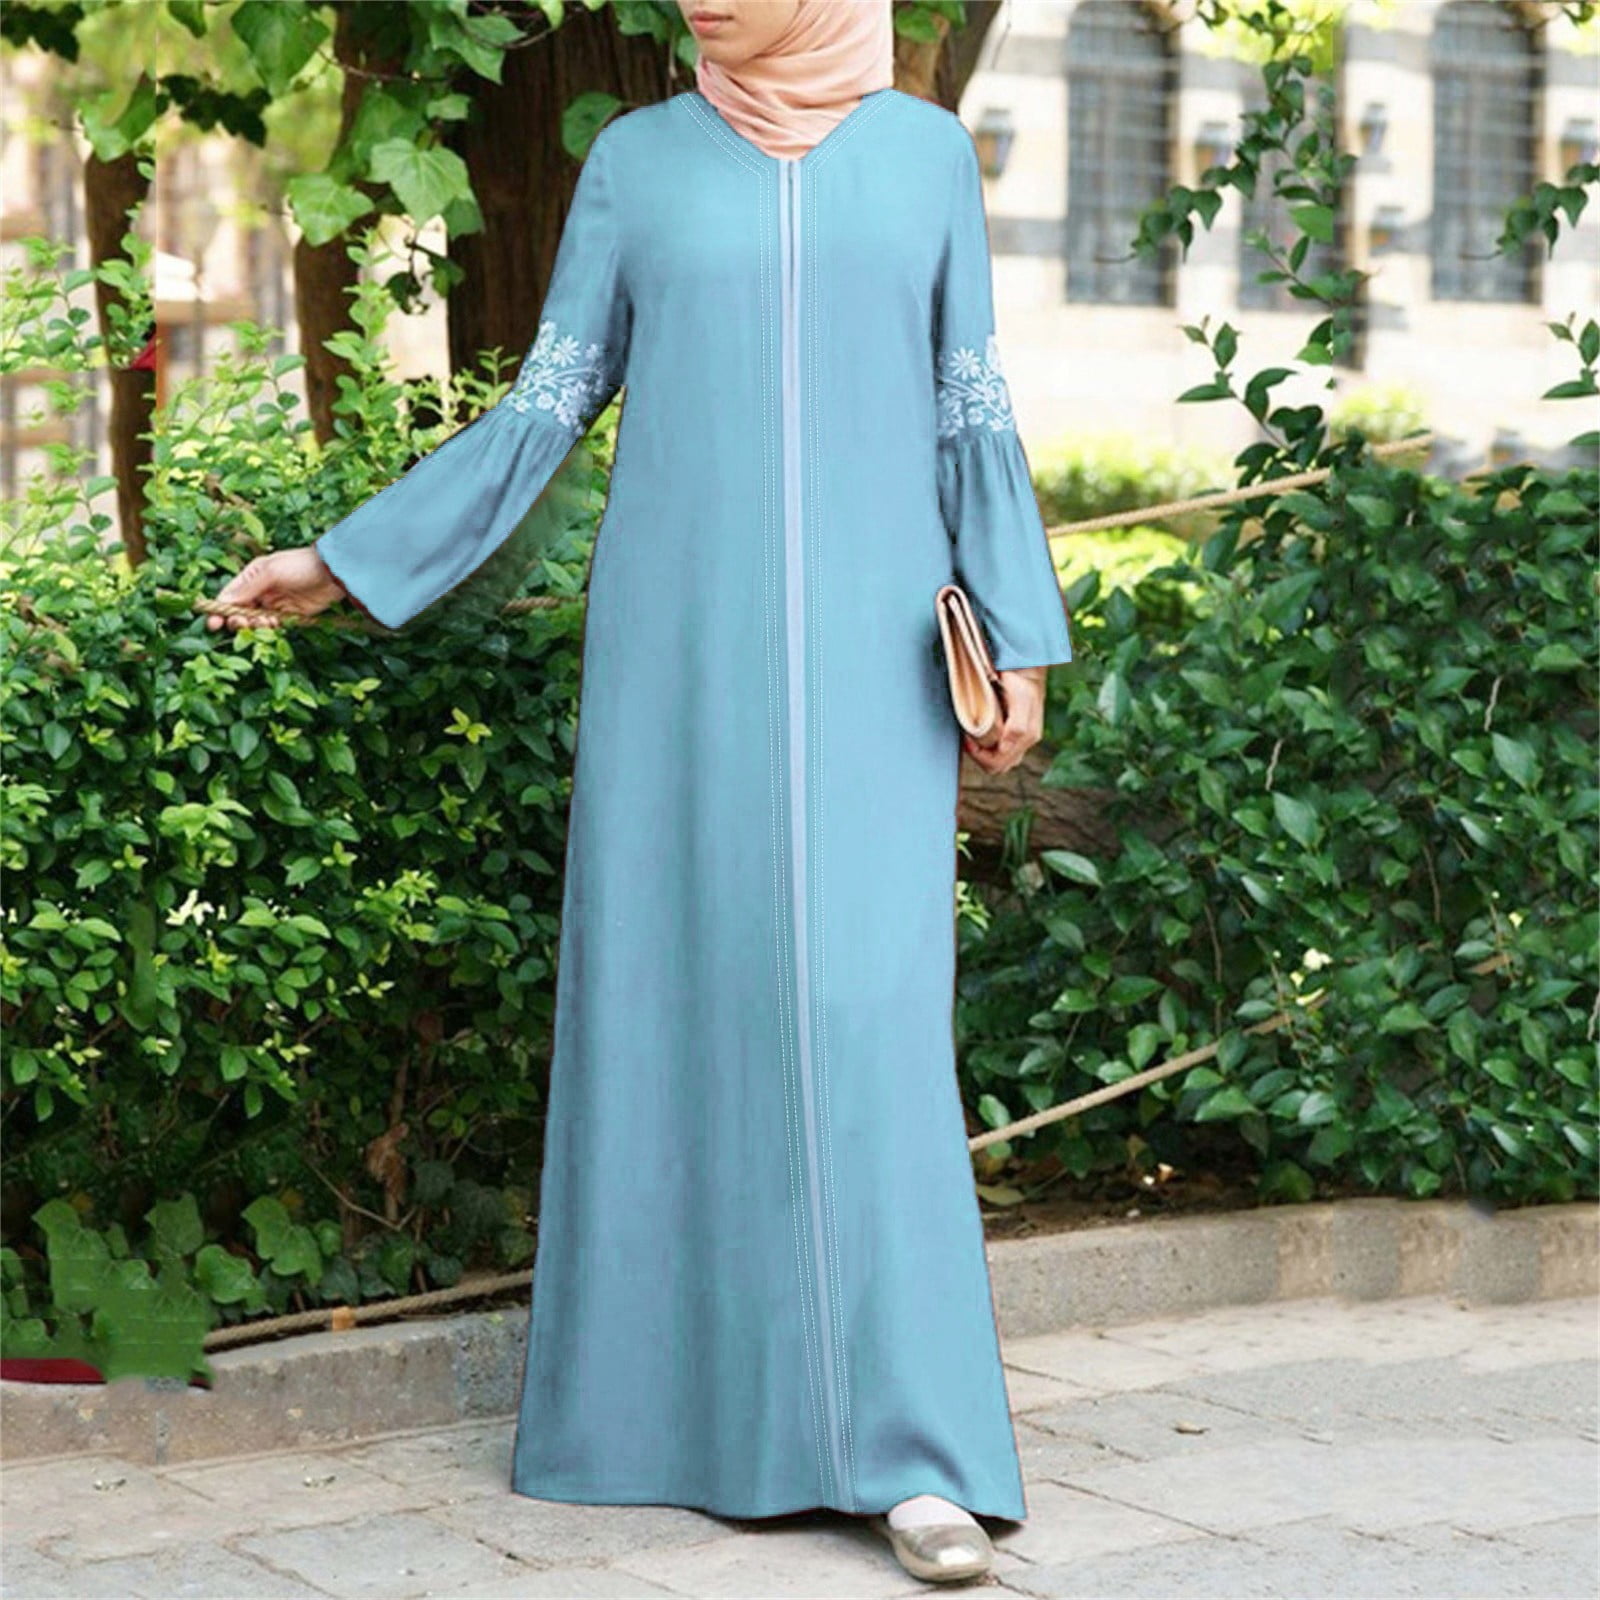 muslim dress